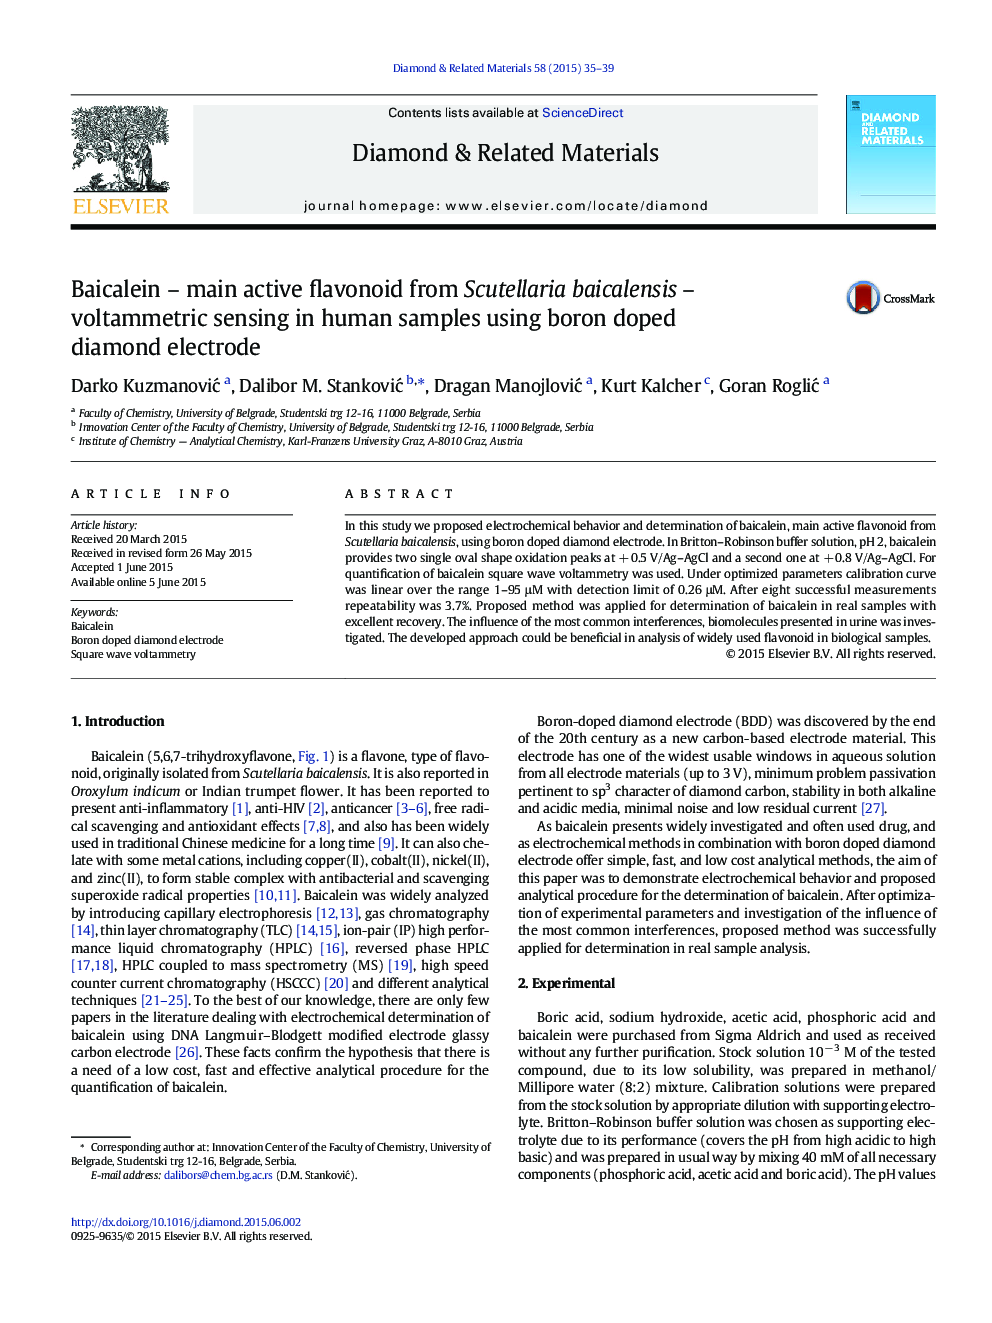 Baicalein – main active flavonoid from Scutellaria baicalensis – voltammetric sensing in human samples using boron doped diamond electrode